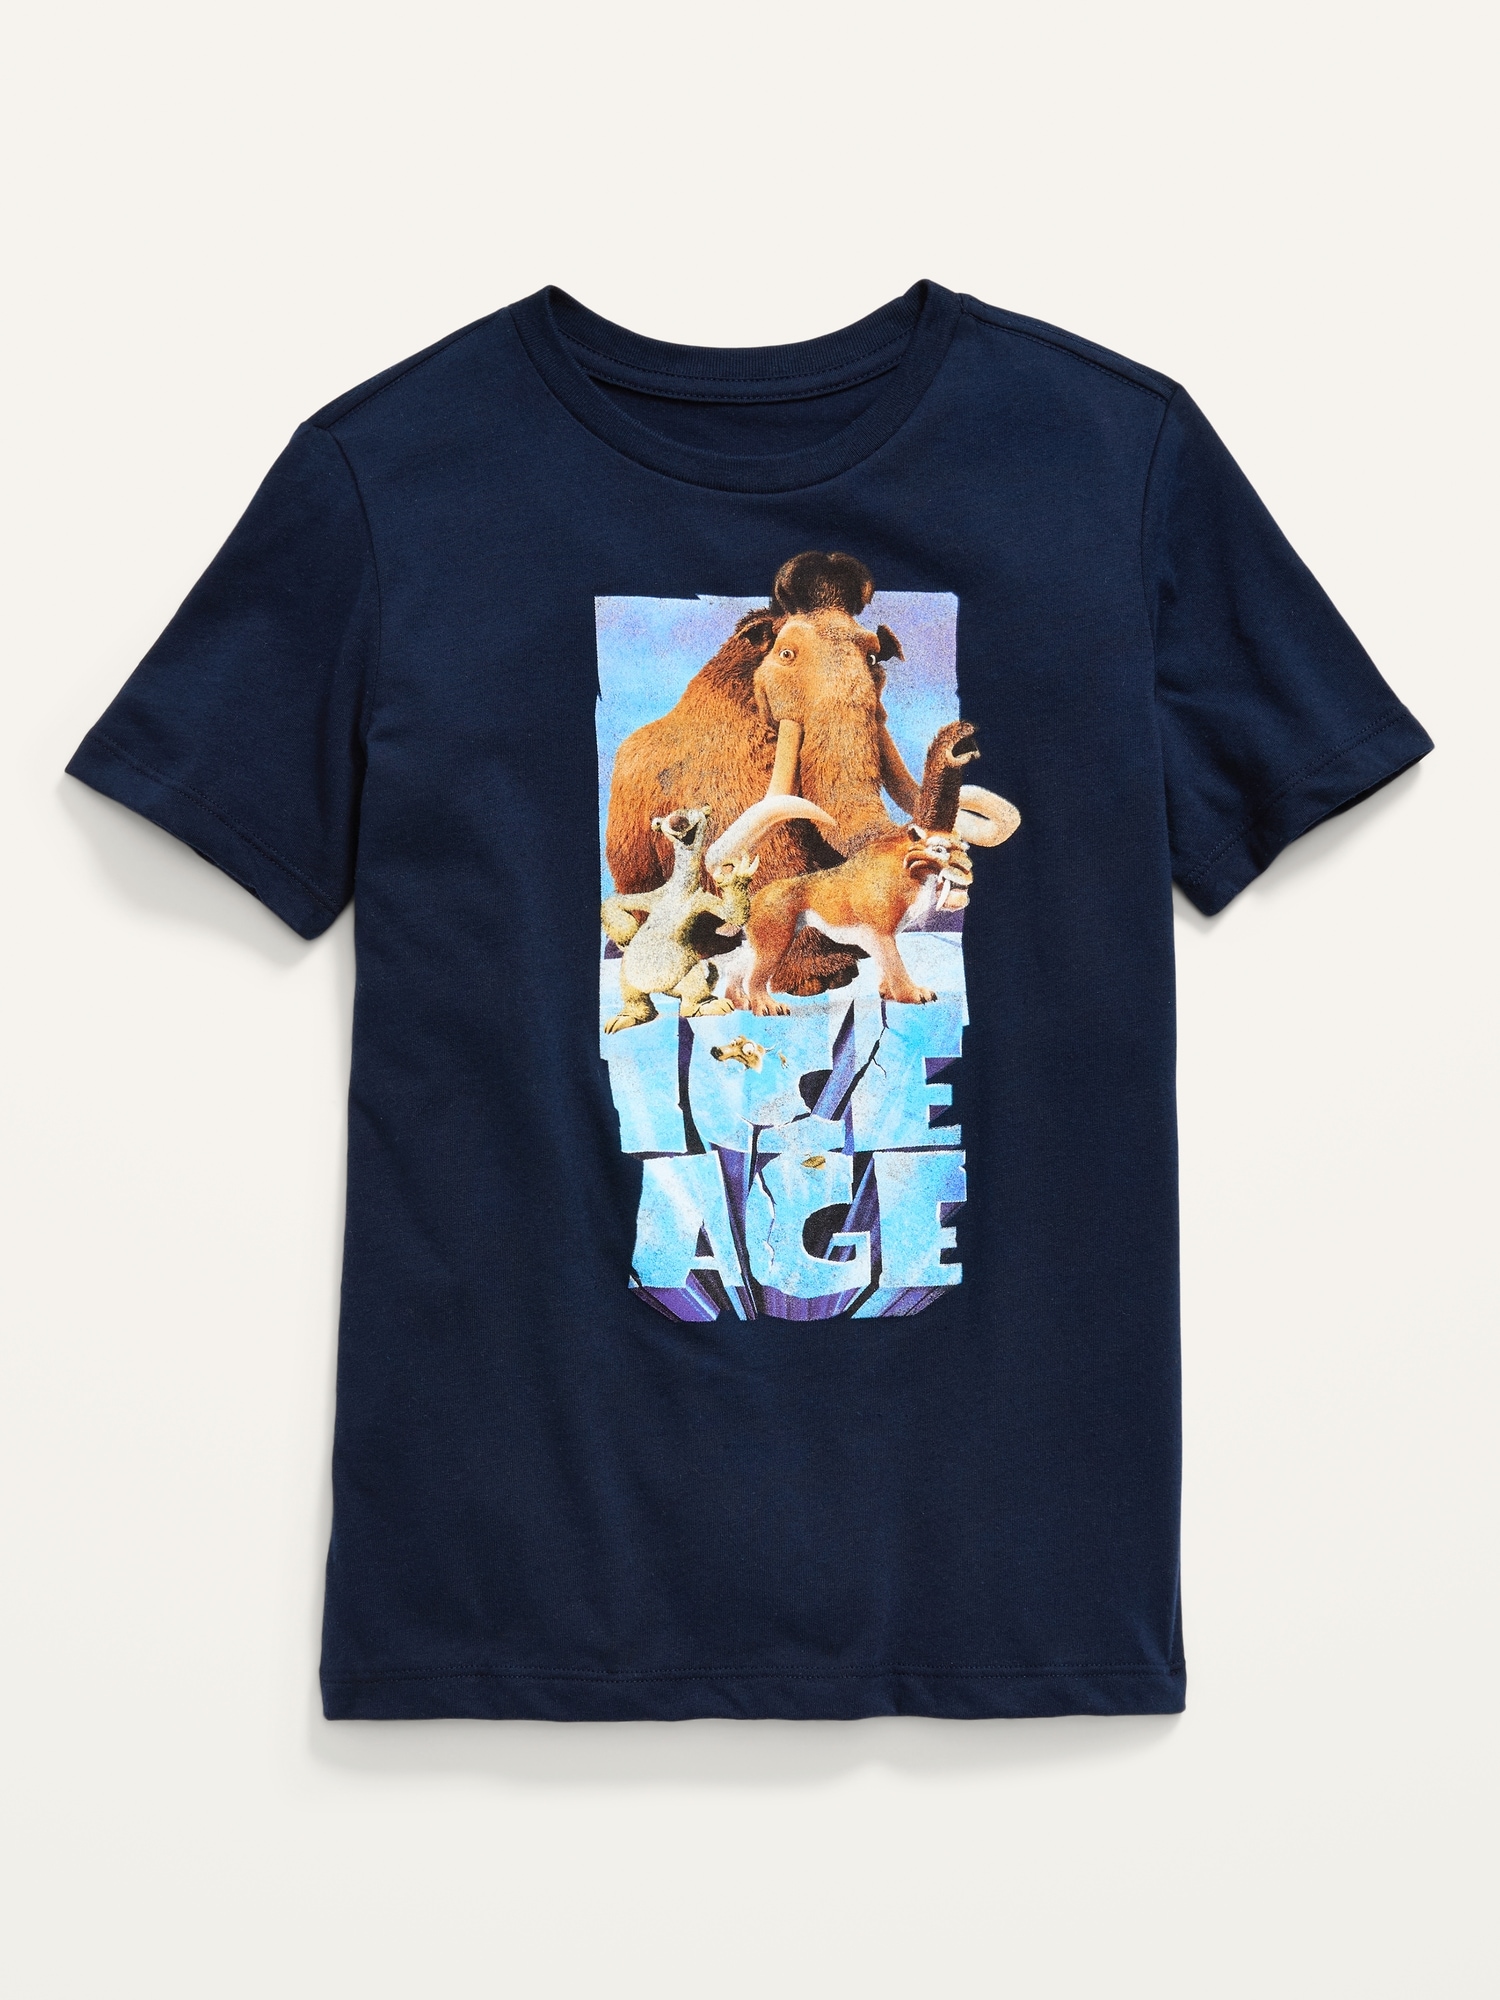 Gender-Neutral Licensed Pop Culture Graphic T-Shirt for Kids | Old Navy